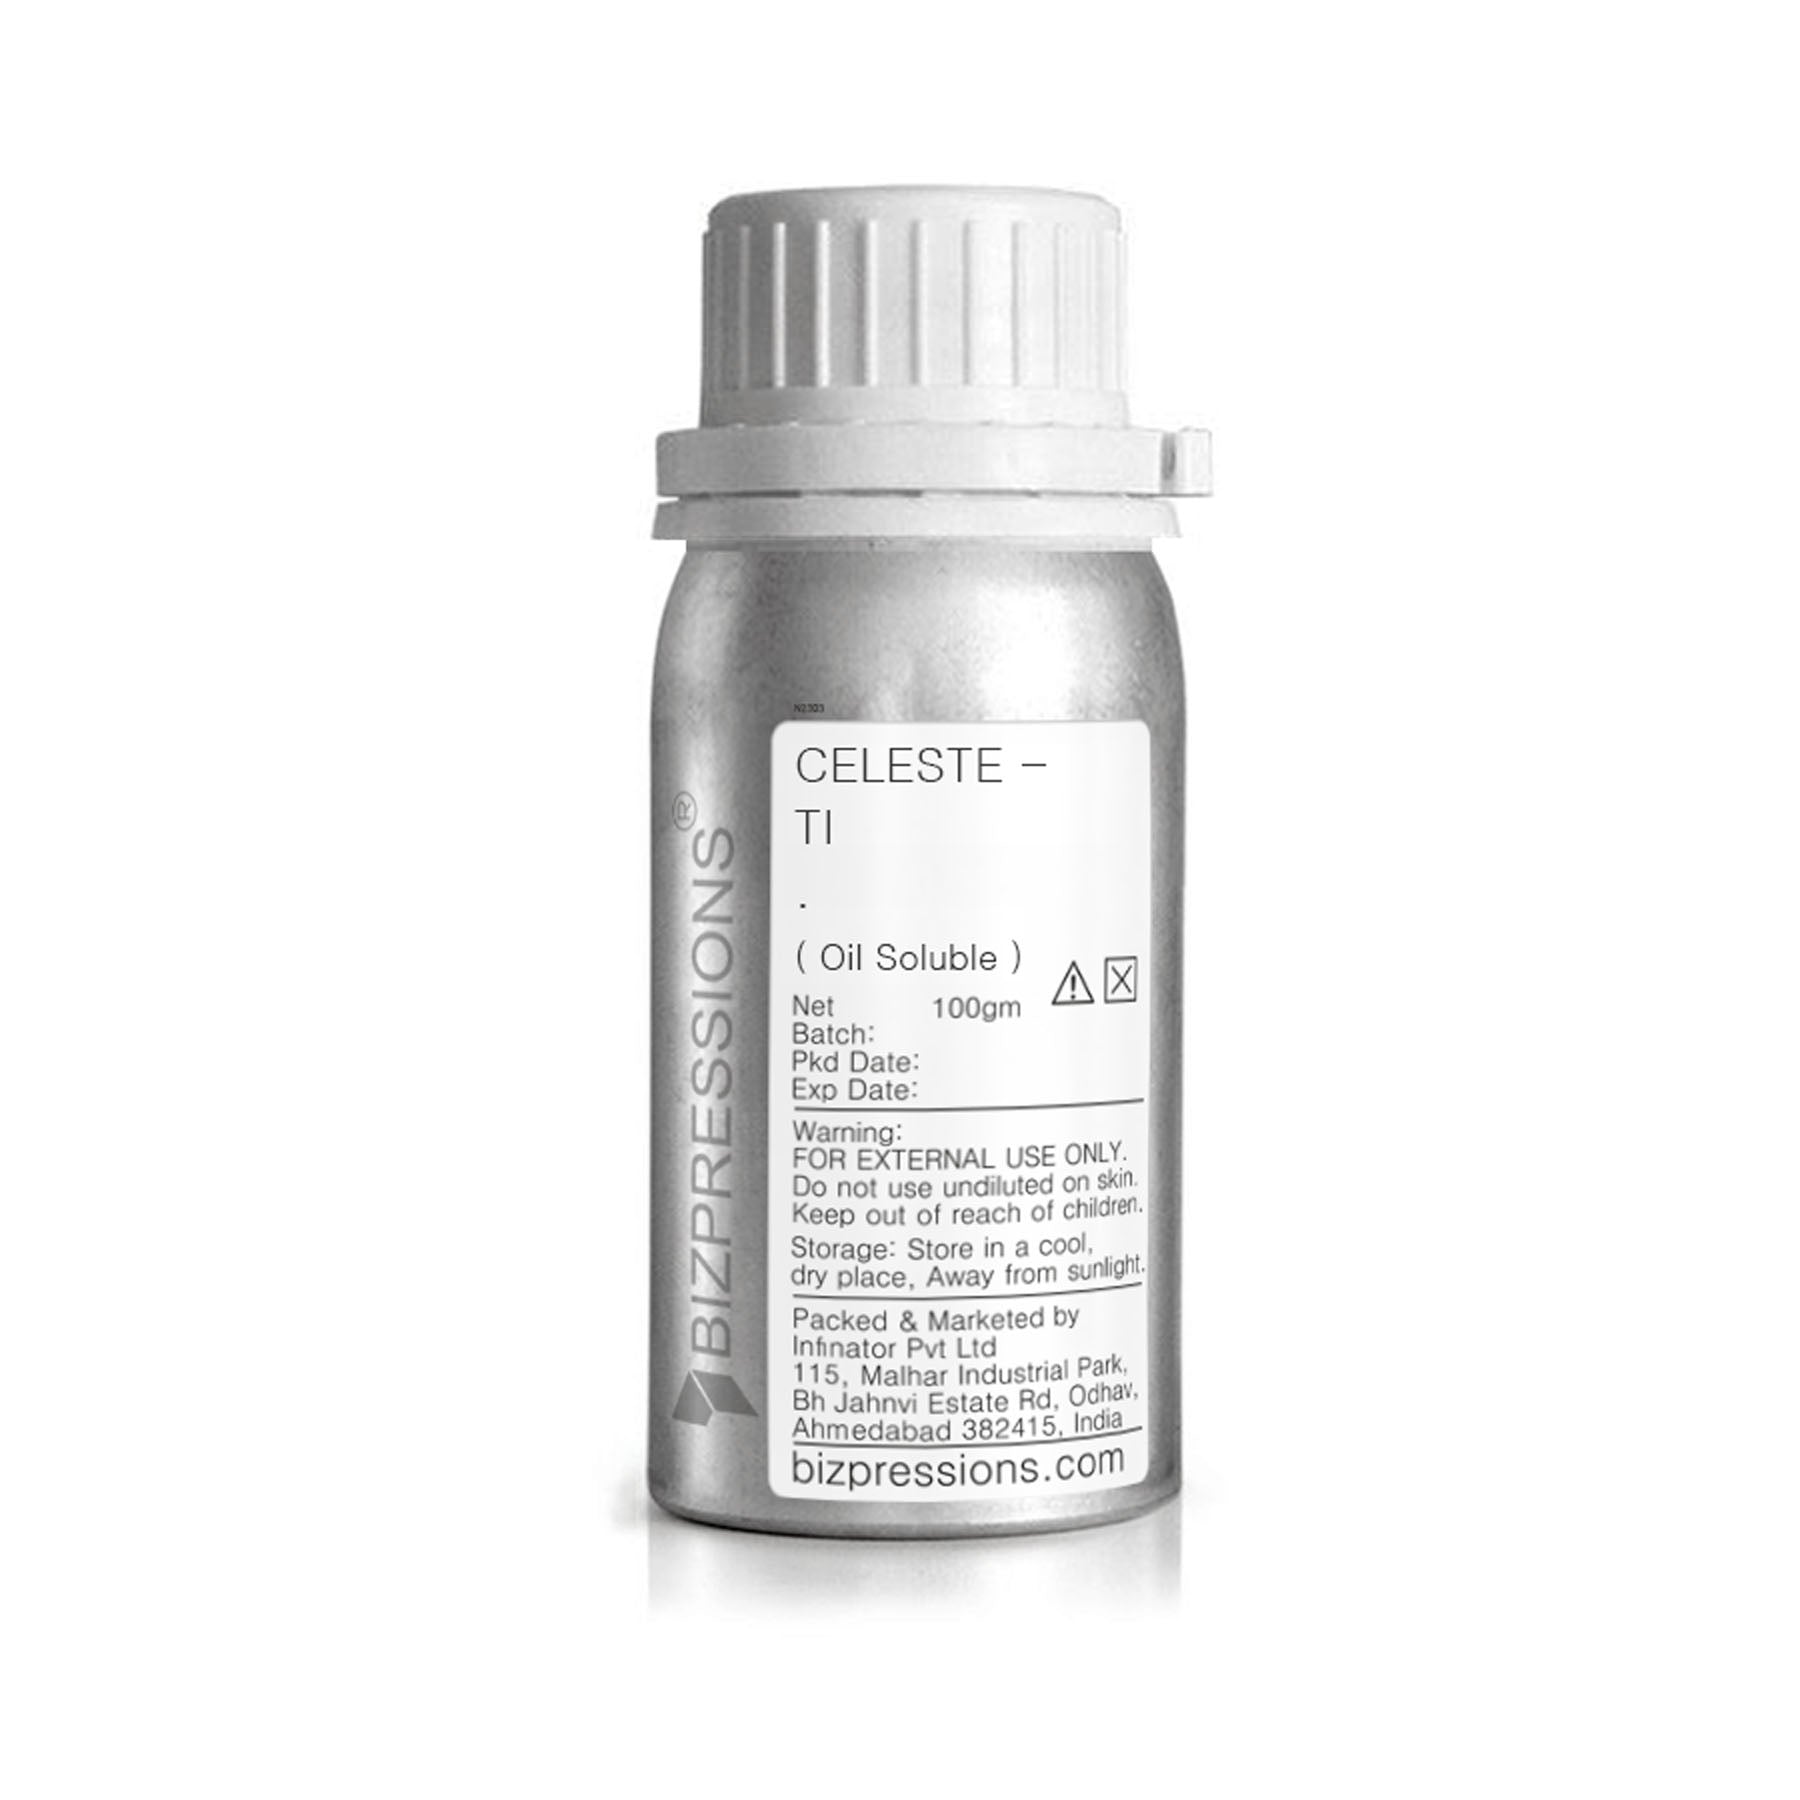 CELESTE - TI - Fragrance ( Oil Soluble ) - 100 gm